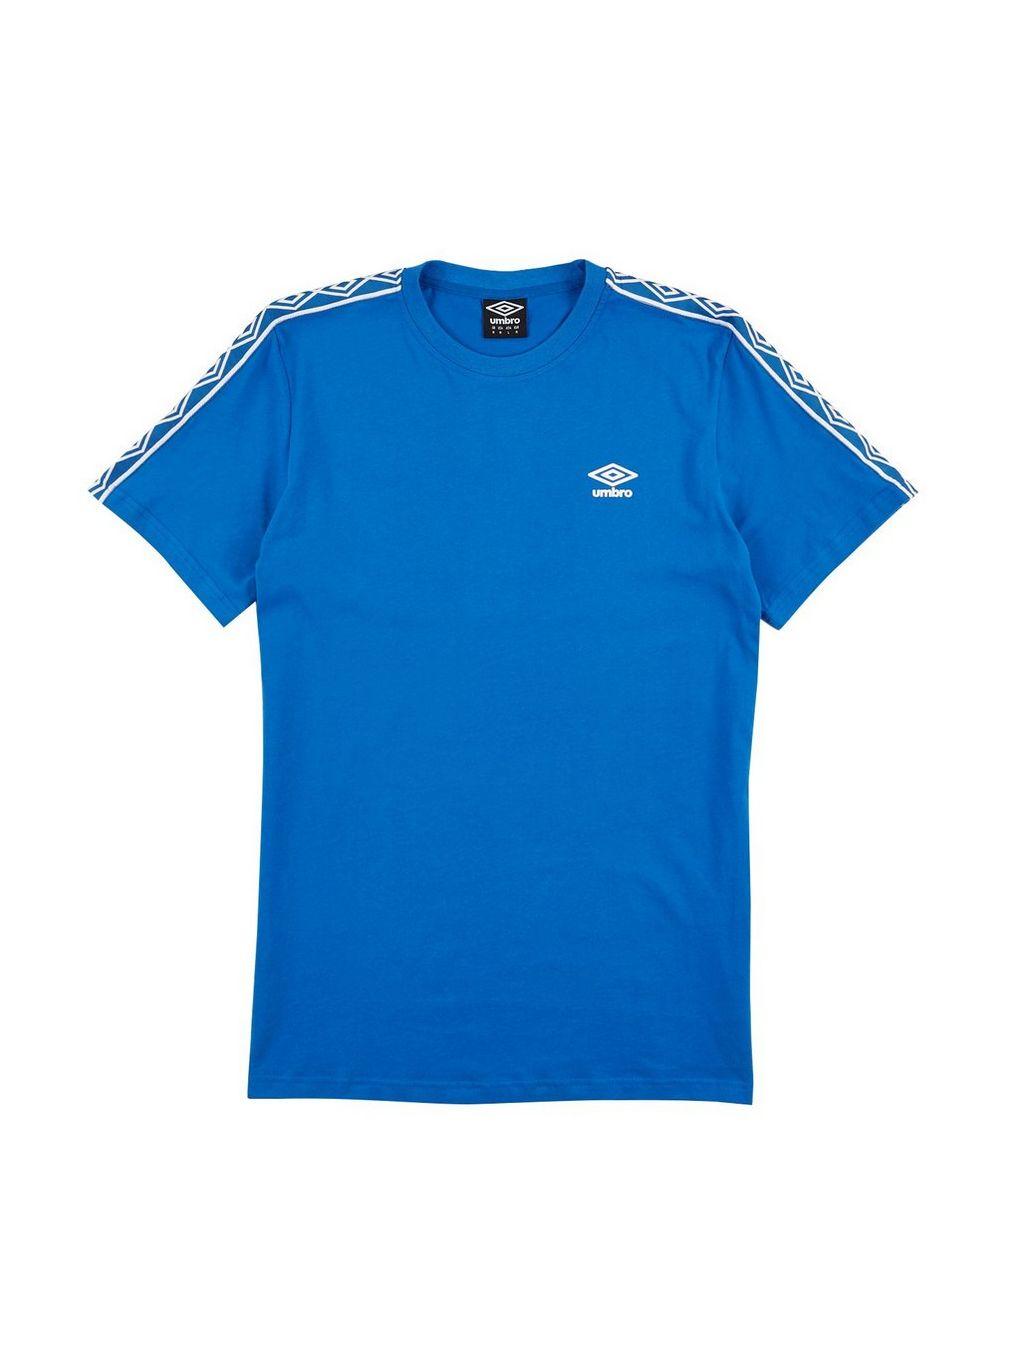 Umbro International Logo - Umbro Blue Retro Logo T Shirt* Shirts & Vests